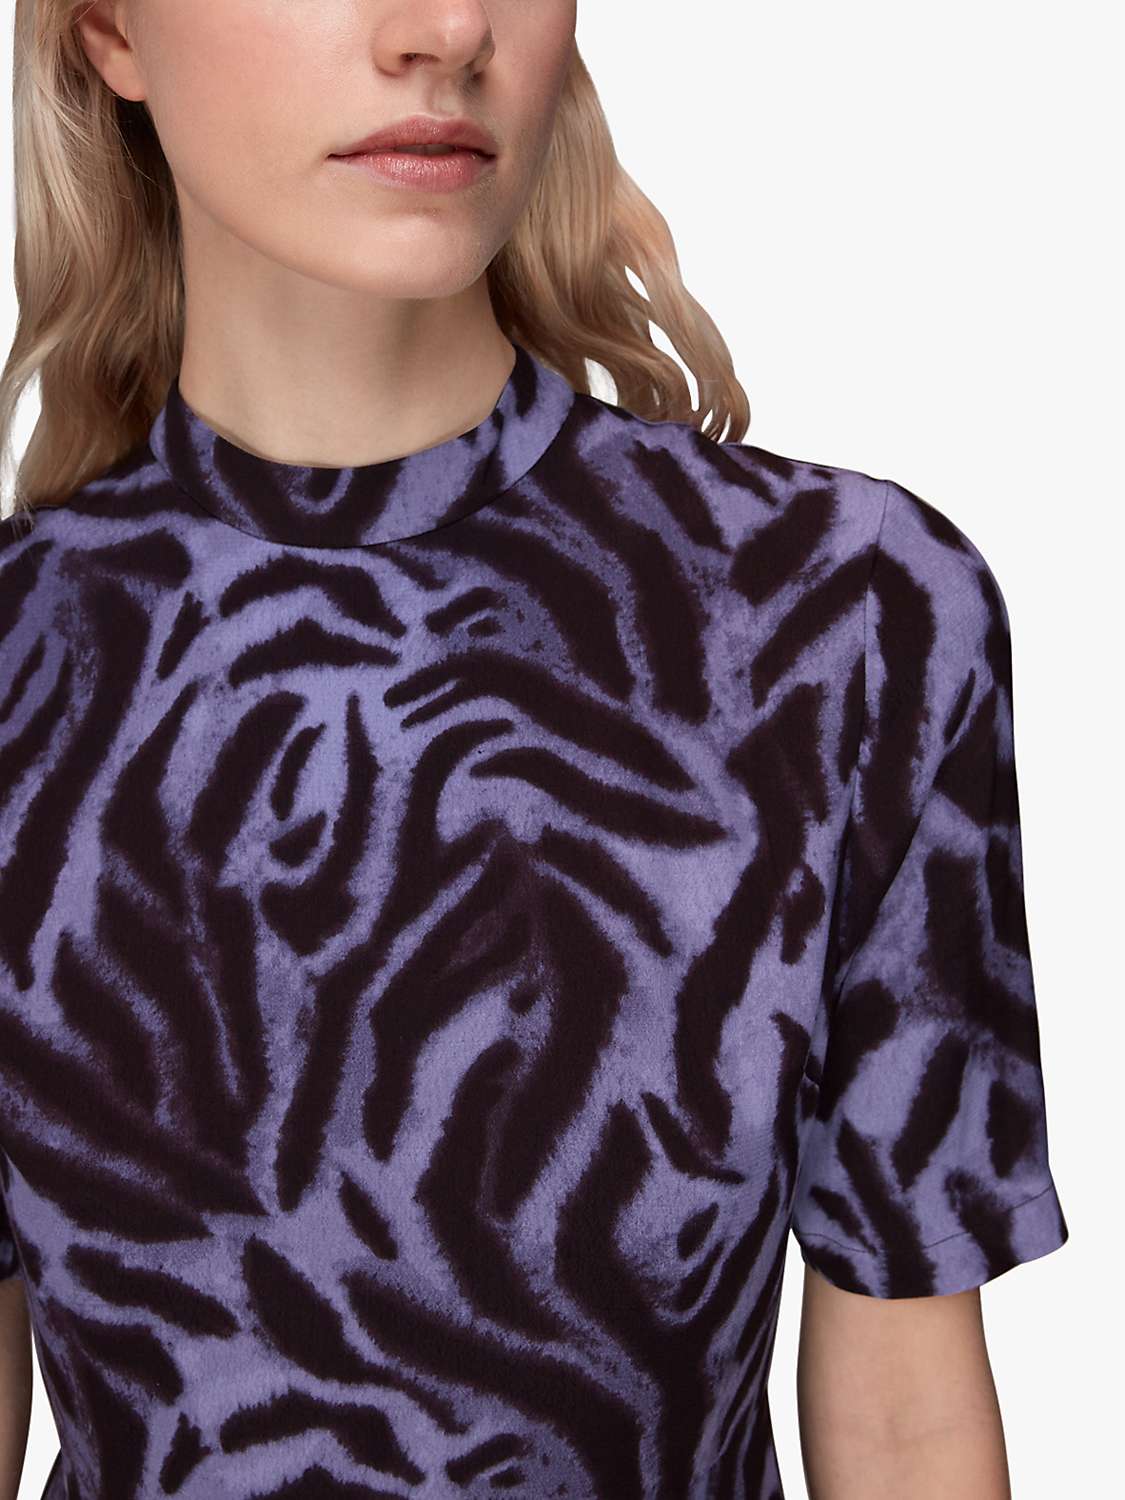 Buy Whistles Woodland Tiger Print Midi Dress, Purple/Multi Online at johnlewis.com